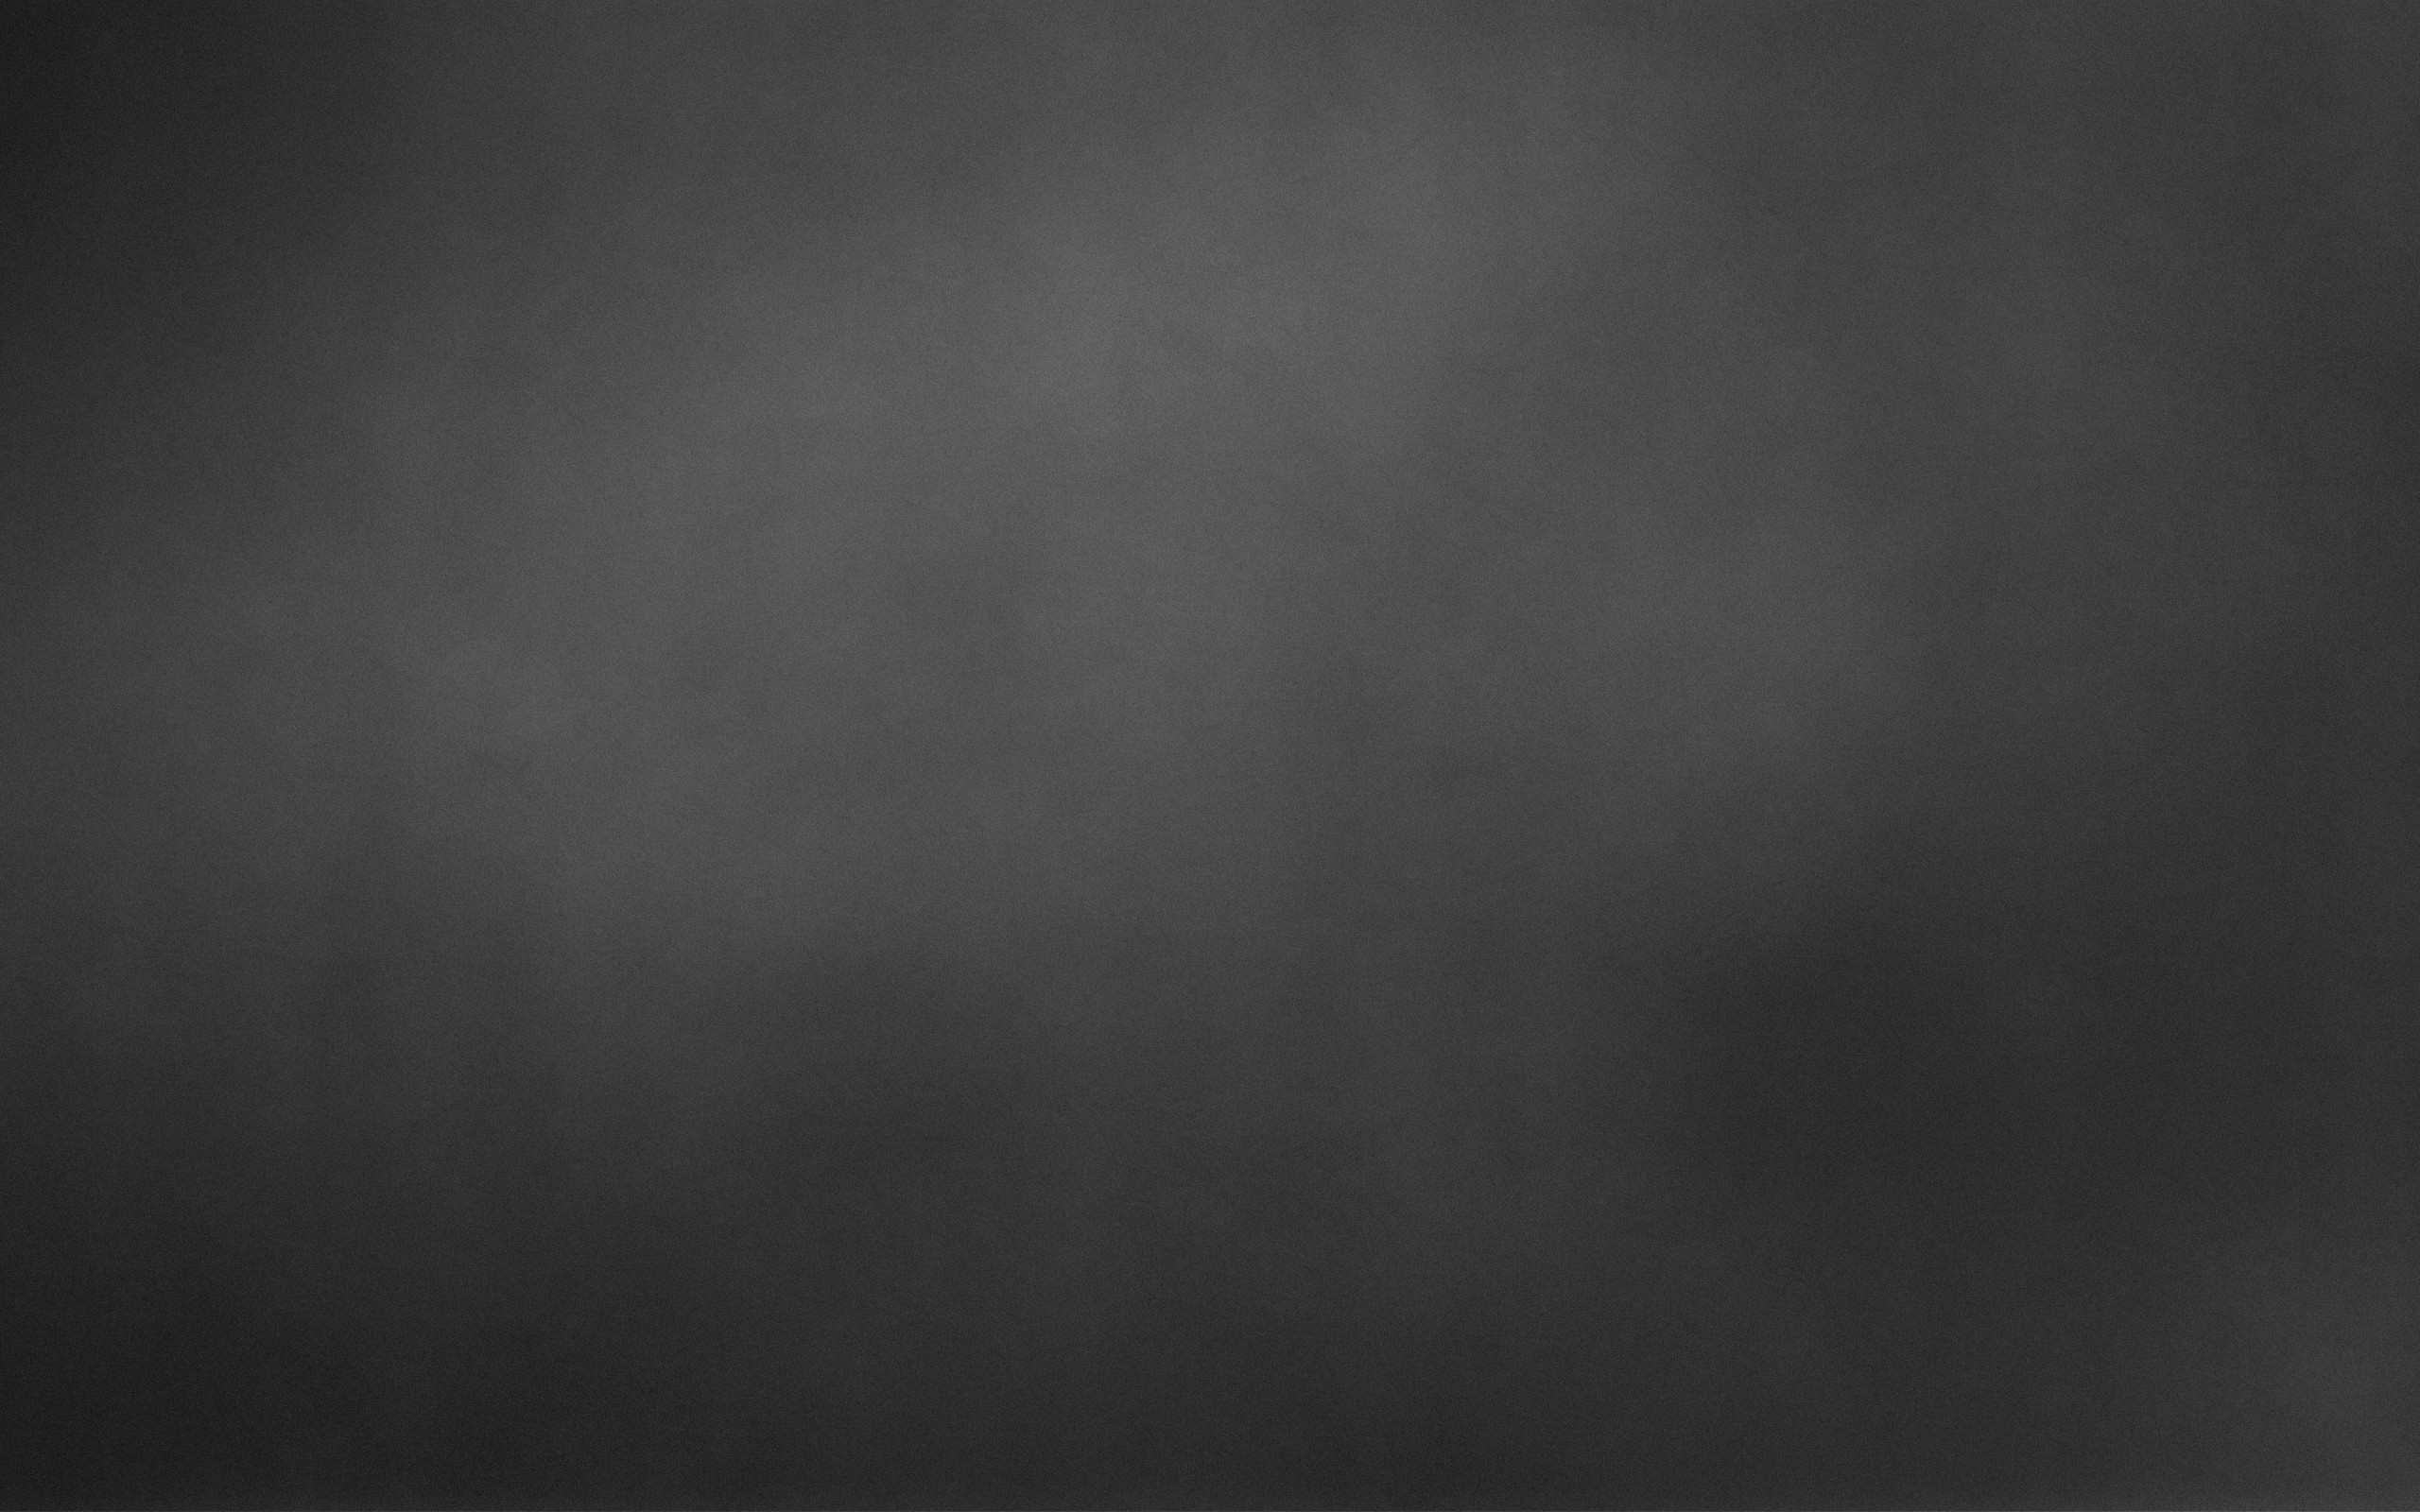 Dark Grey Black Slate Background or Texture Stock Image  Image of blank  background 104901861